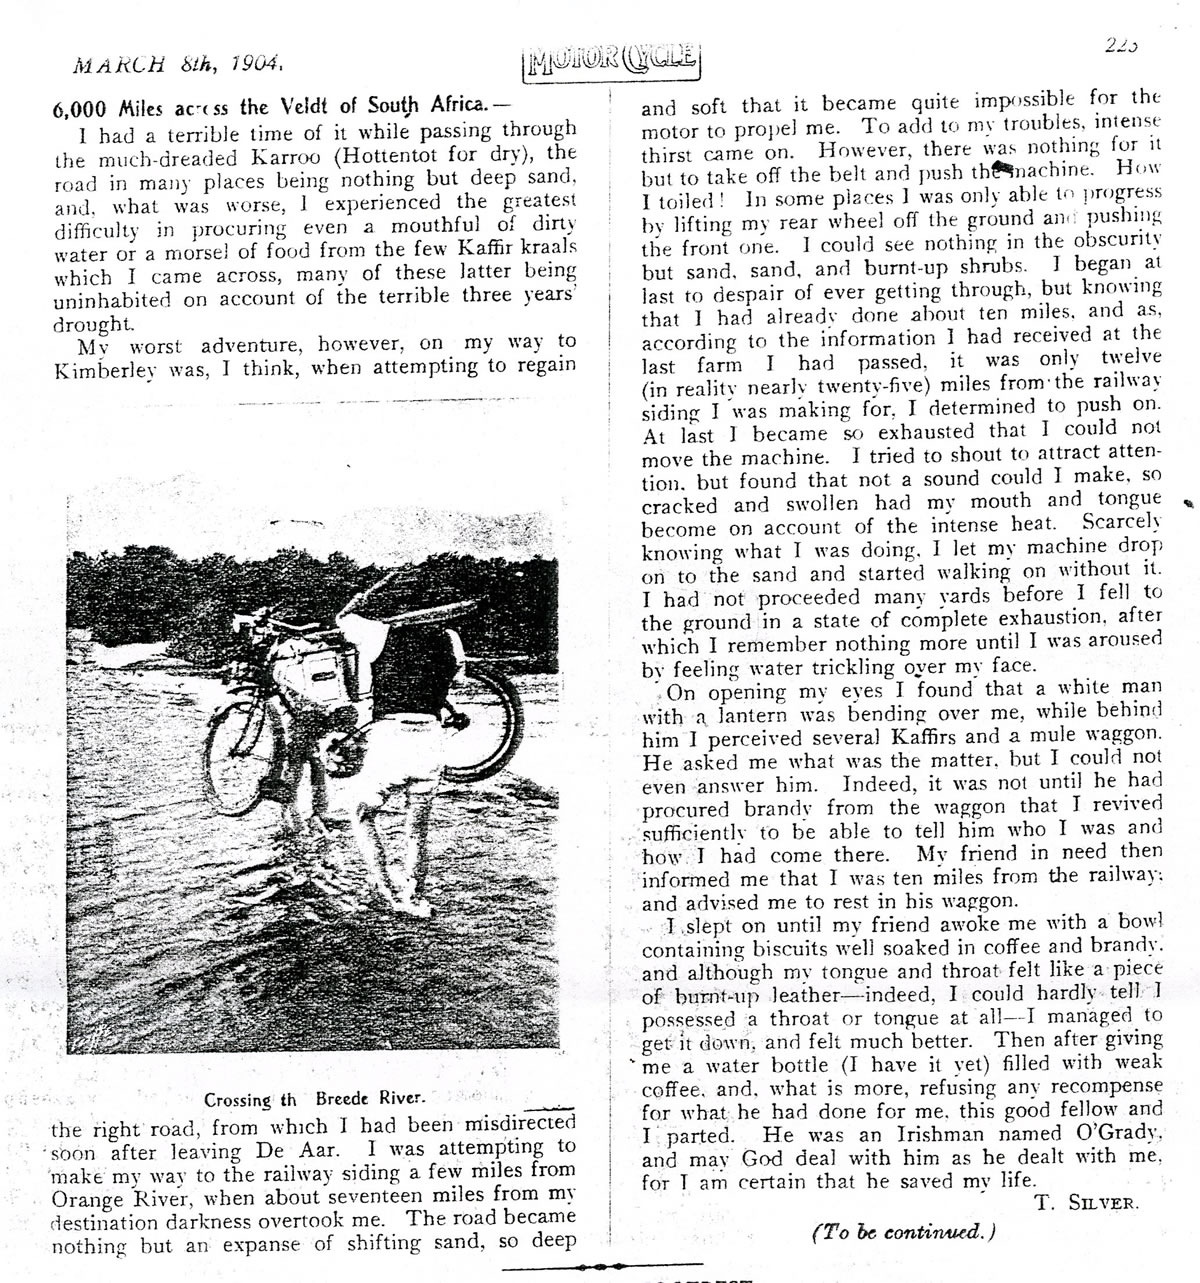 1903 Quadrant MotorCycle Tom Silver